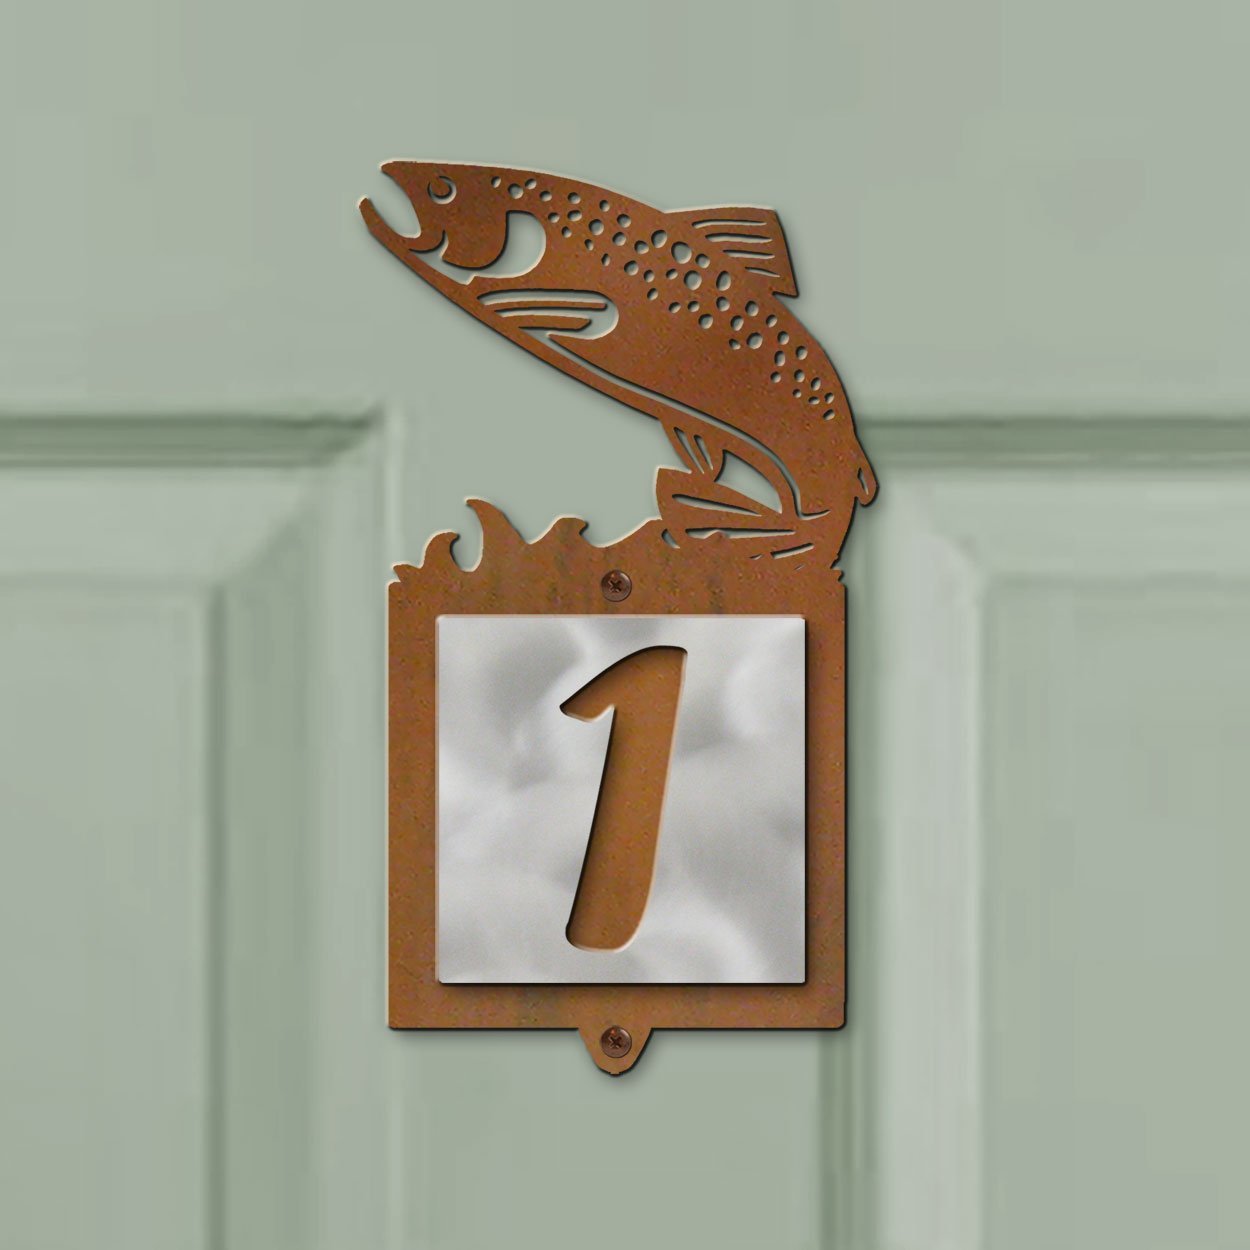 605411 - Trout Design One-Digit Rustic Tile Door Number